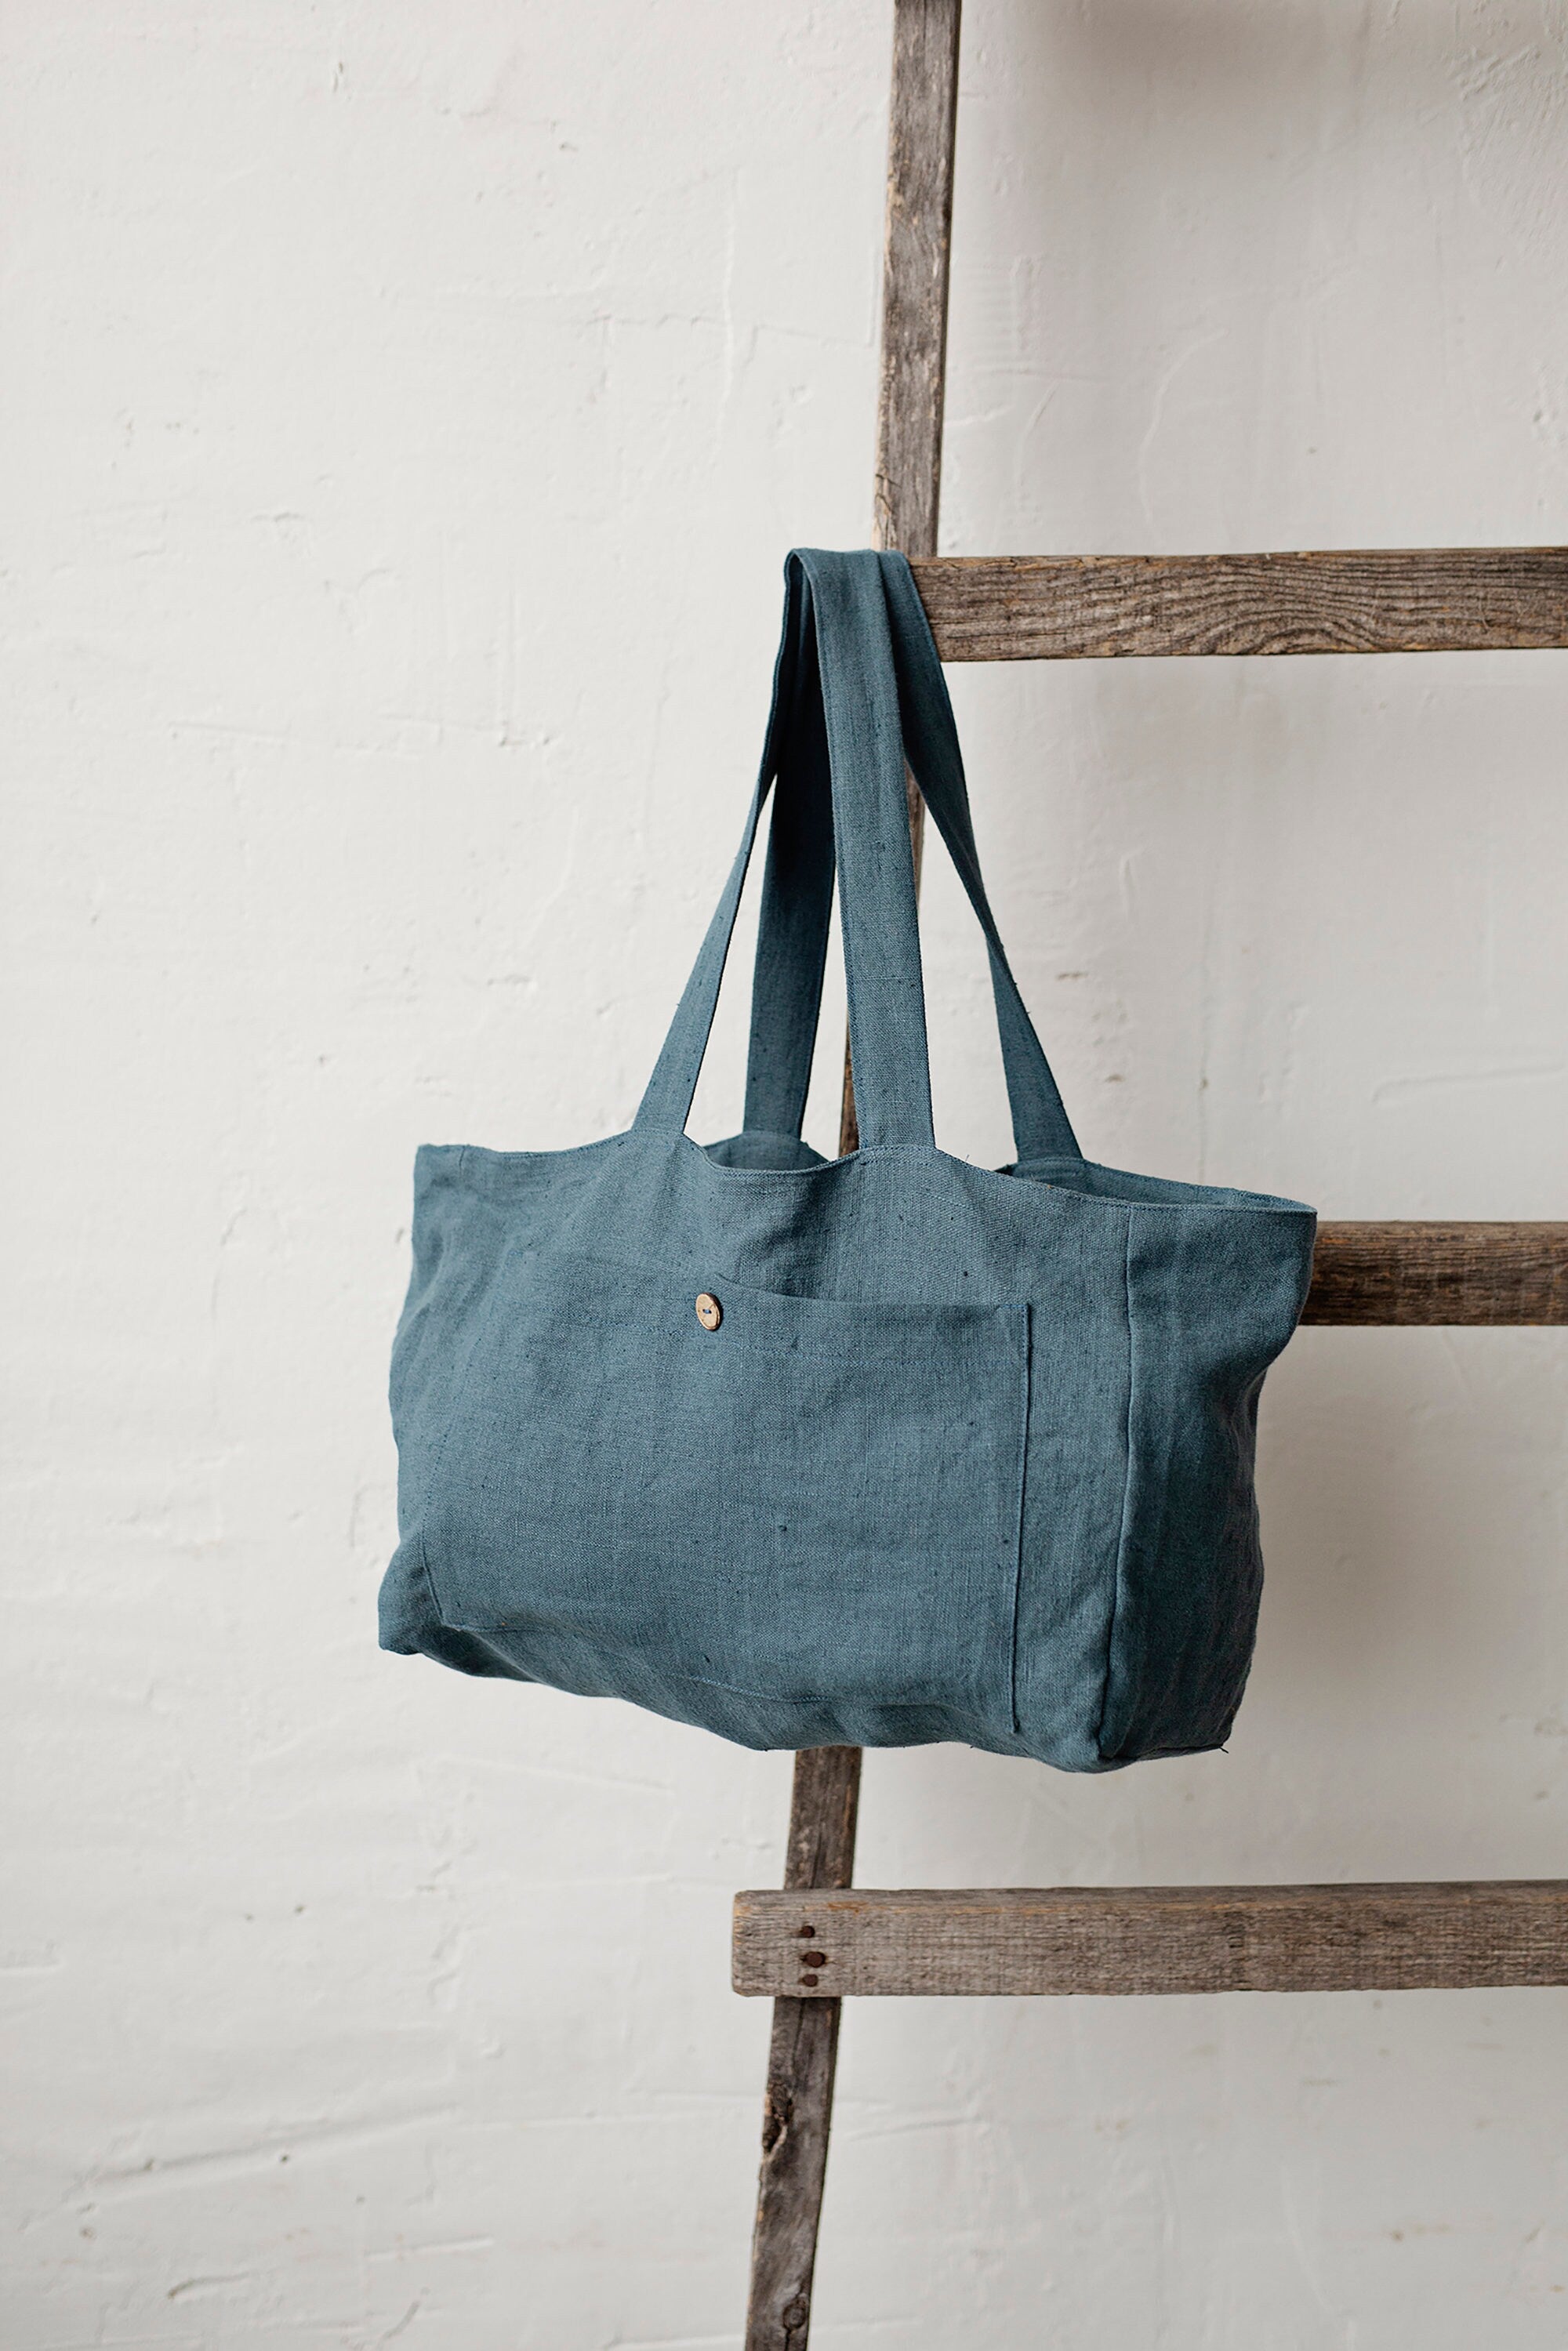 Marine Blue Classic Linen Bag